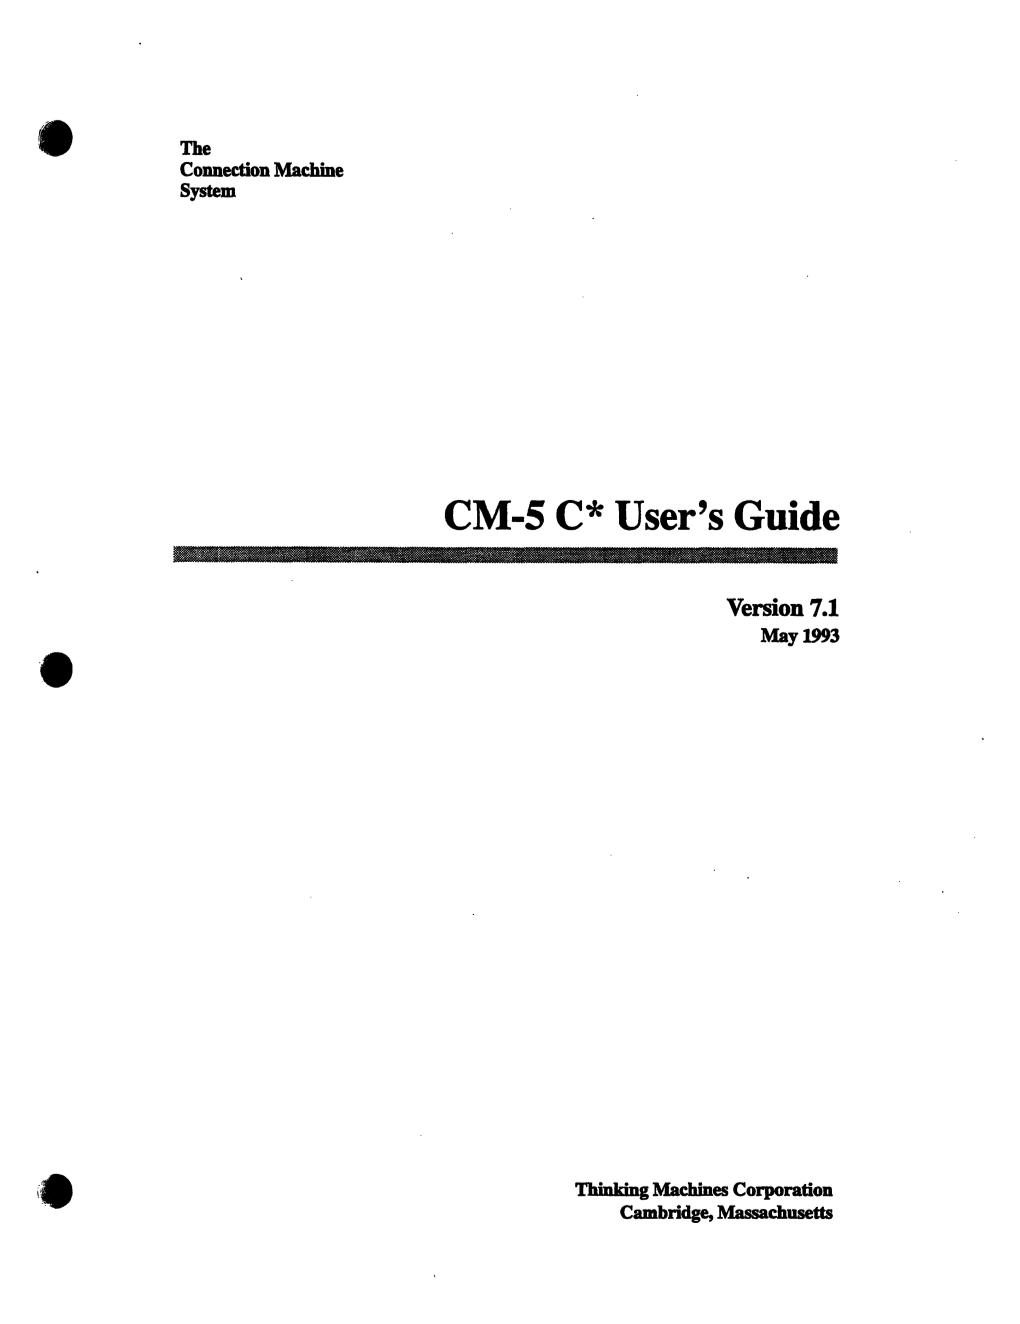 CM-5 C* User's Guide